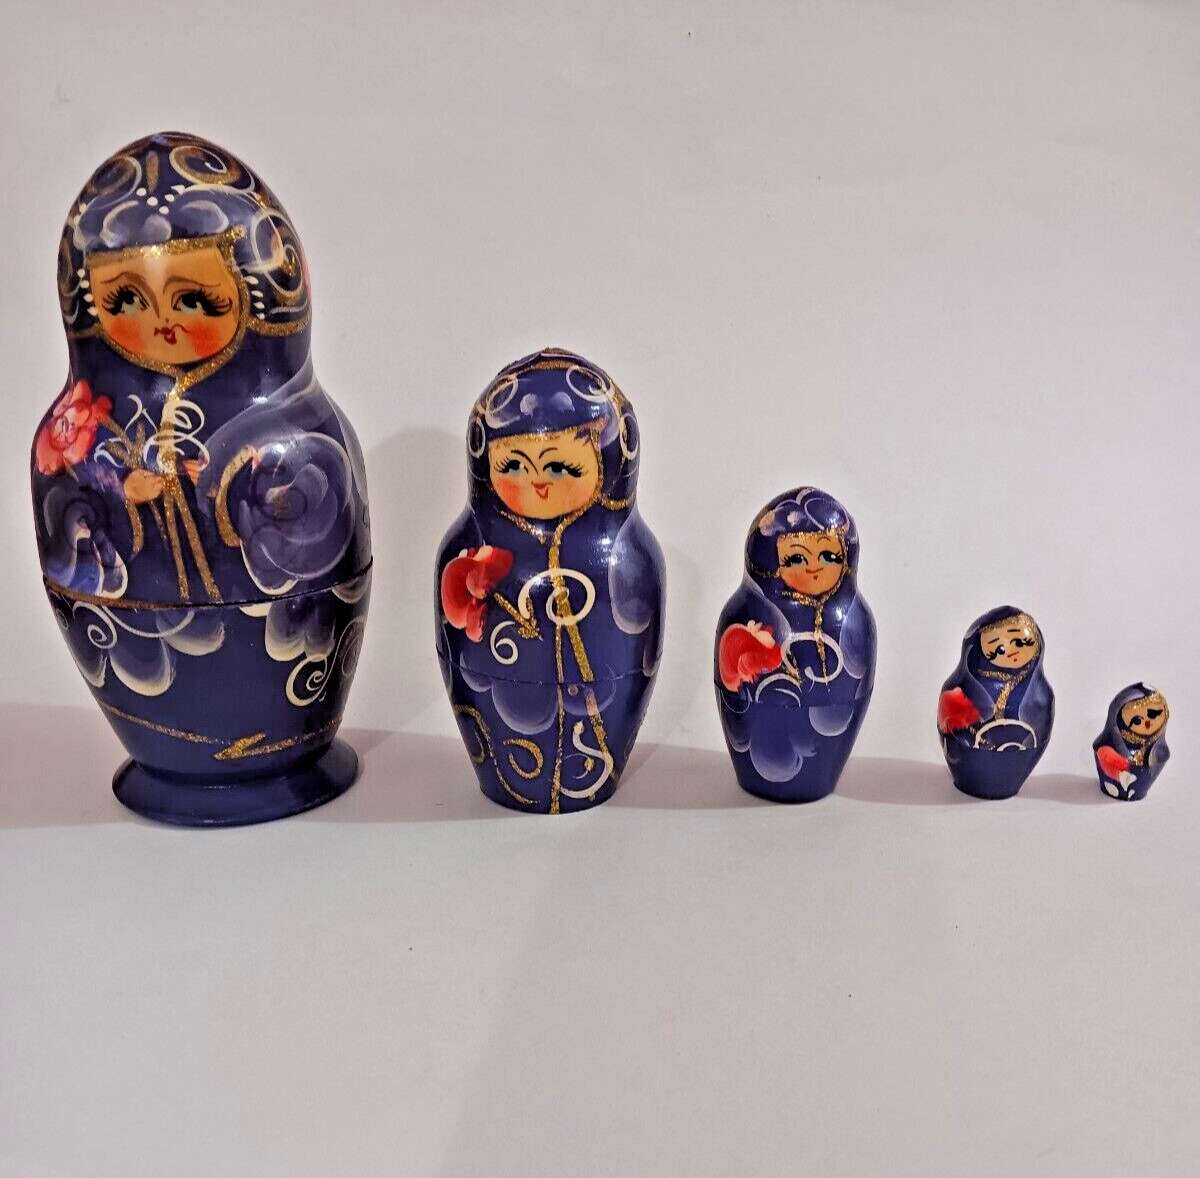 Vintage Russian Wooden Matryoshka Nesting Dolls Hand Painted